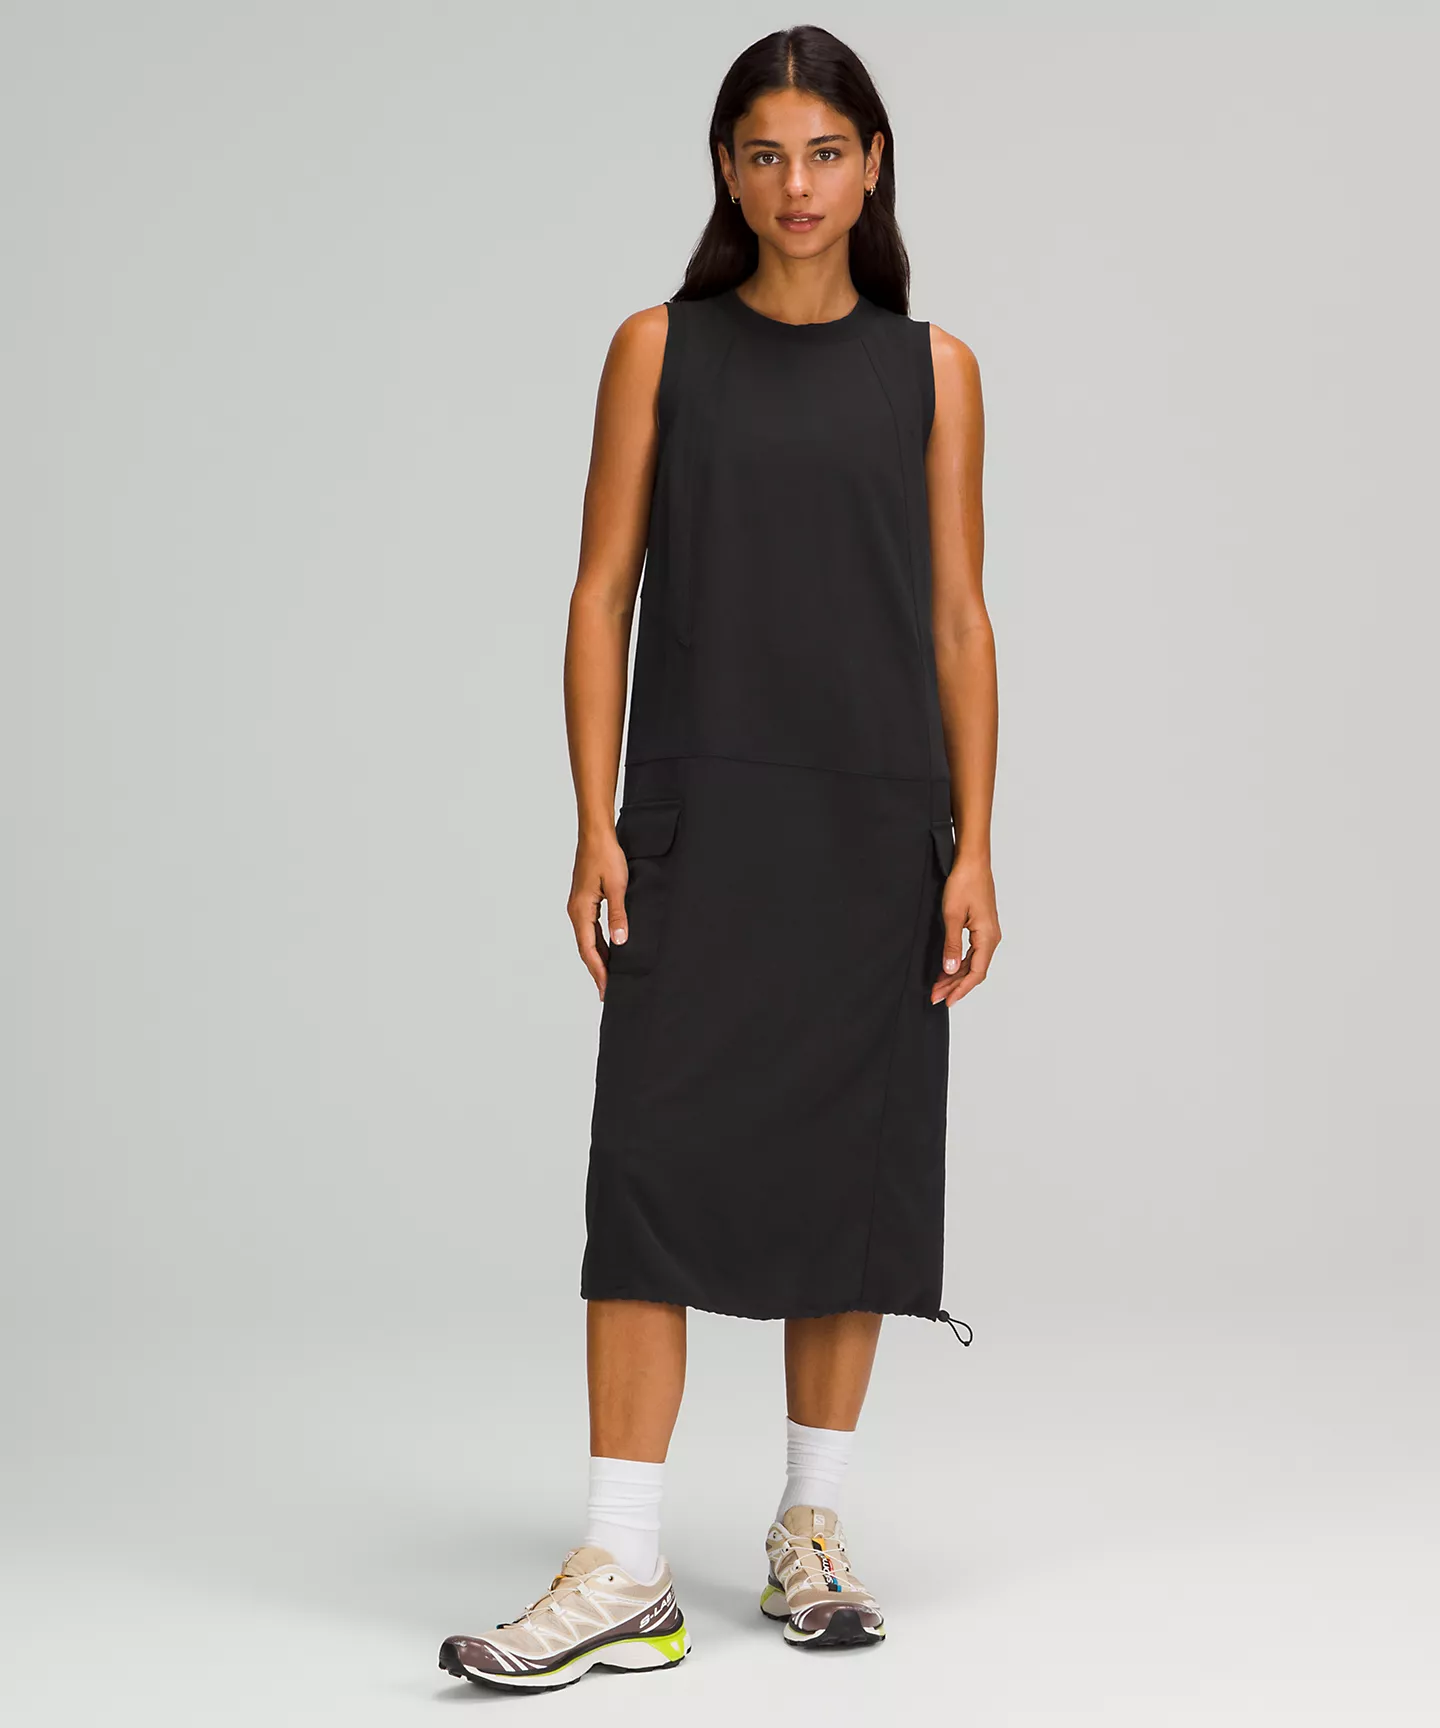 Summer Essentials 2022: DEALS on lululemon dresses, leggings, and